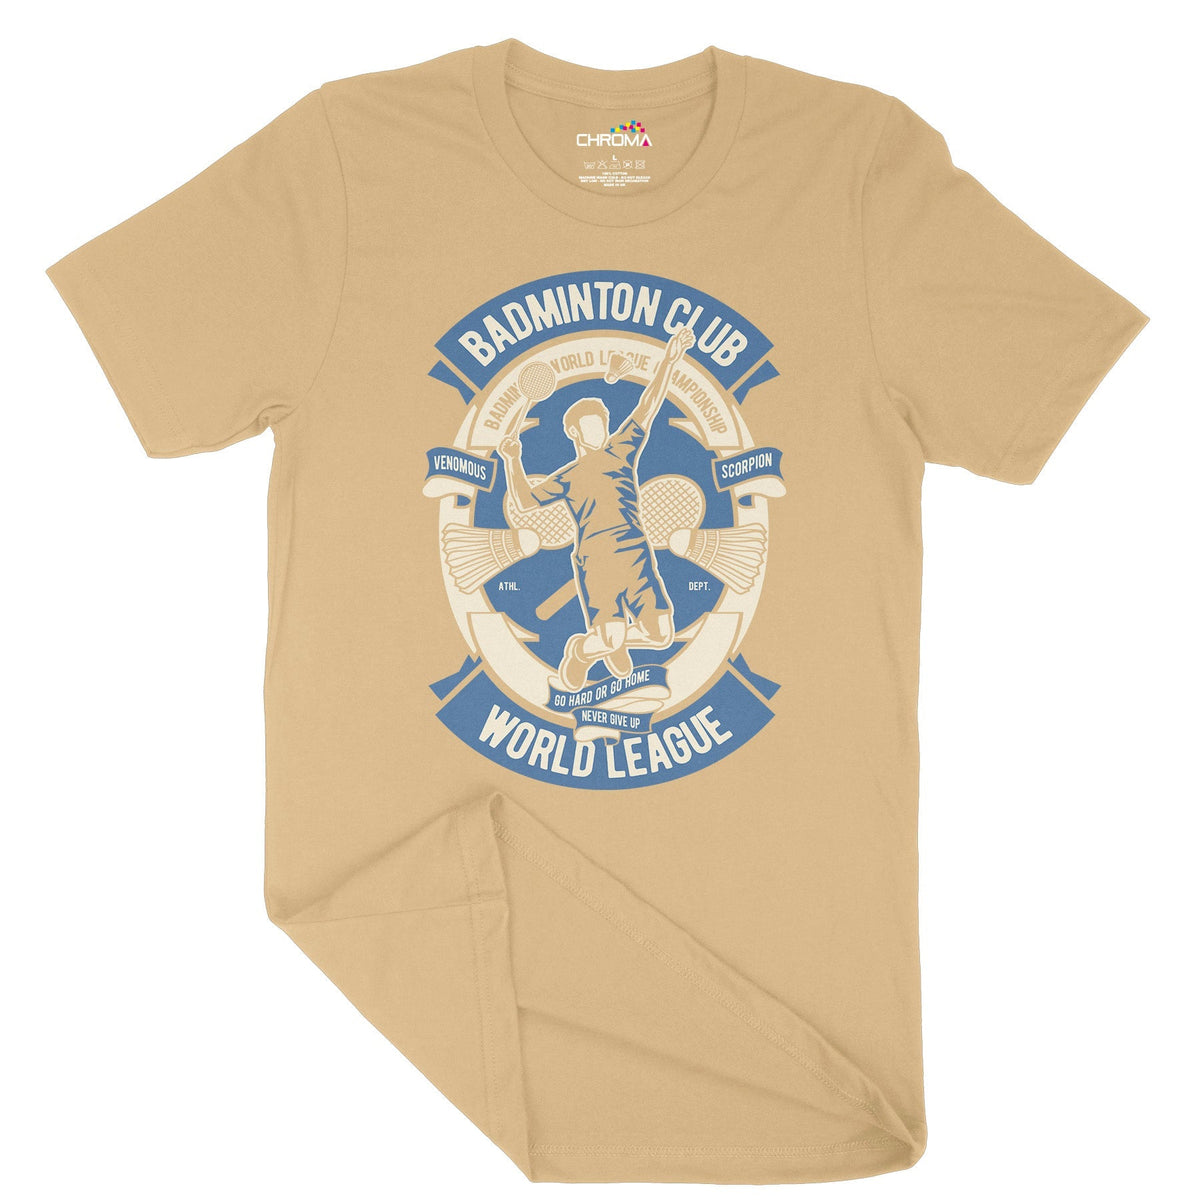 Badminton Club | Vintage Adult T-Shirt | Classic Vintage Clothing Chroma Clothing